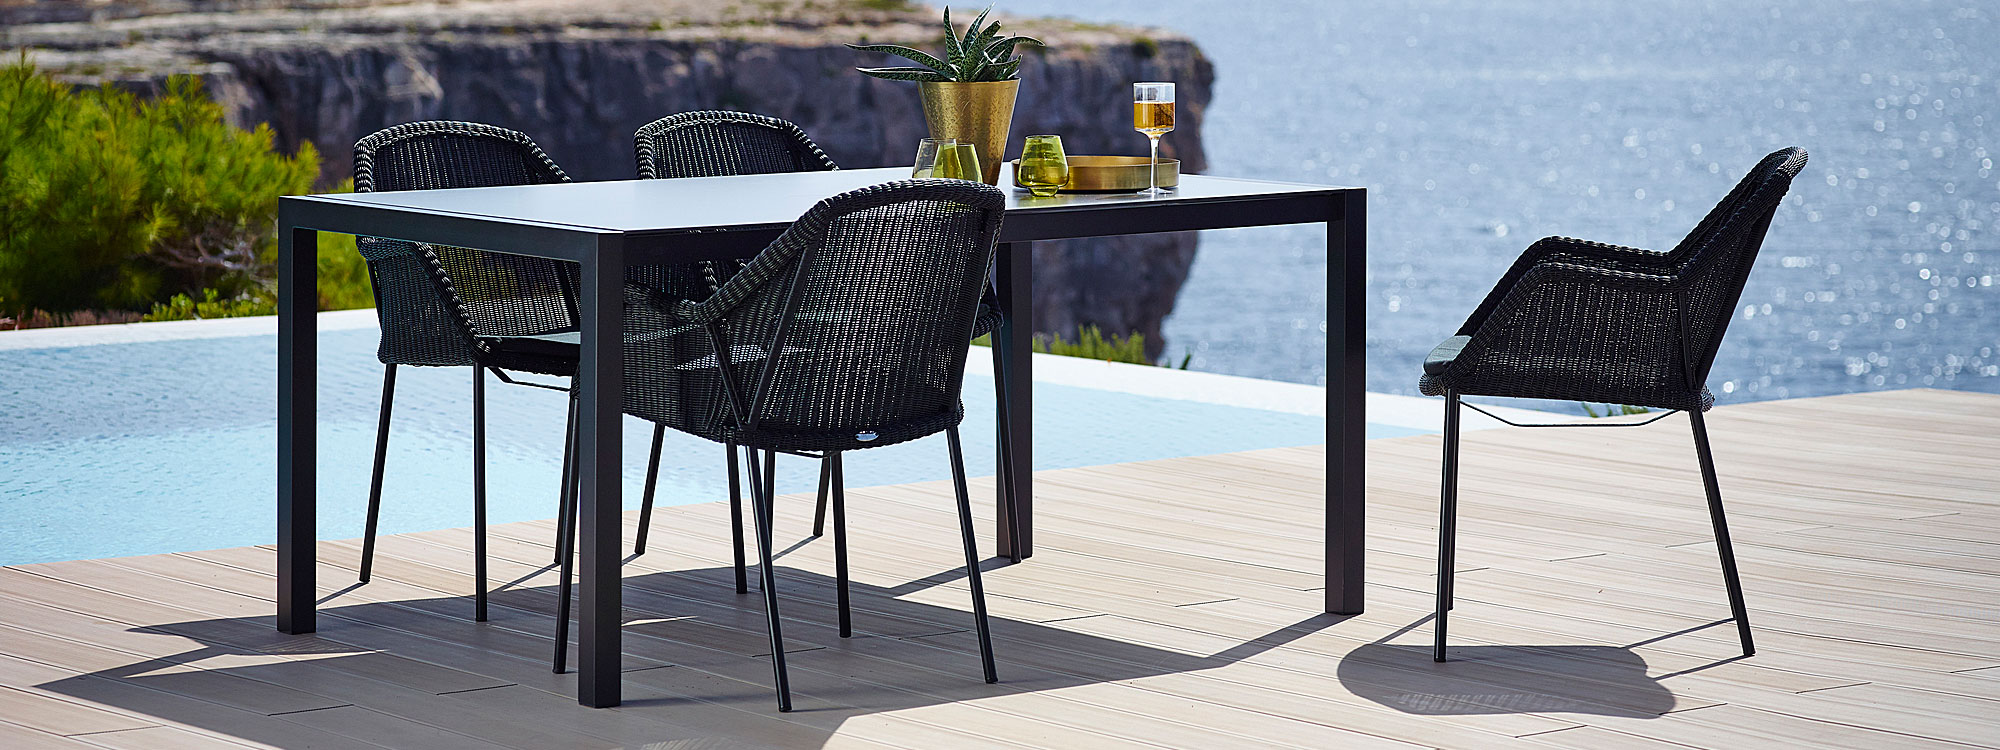 Stacking Breeze modern outdoor dining chair is a designer garden chair in high quality garden furniture materials by Cane-line luxury garden furniture